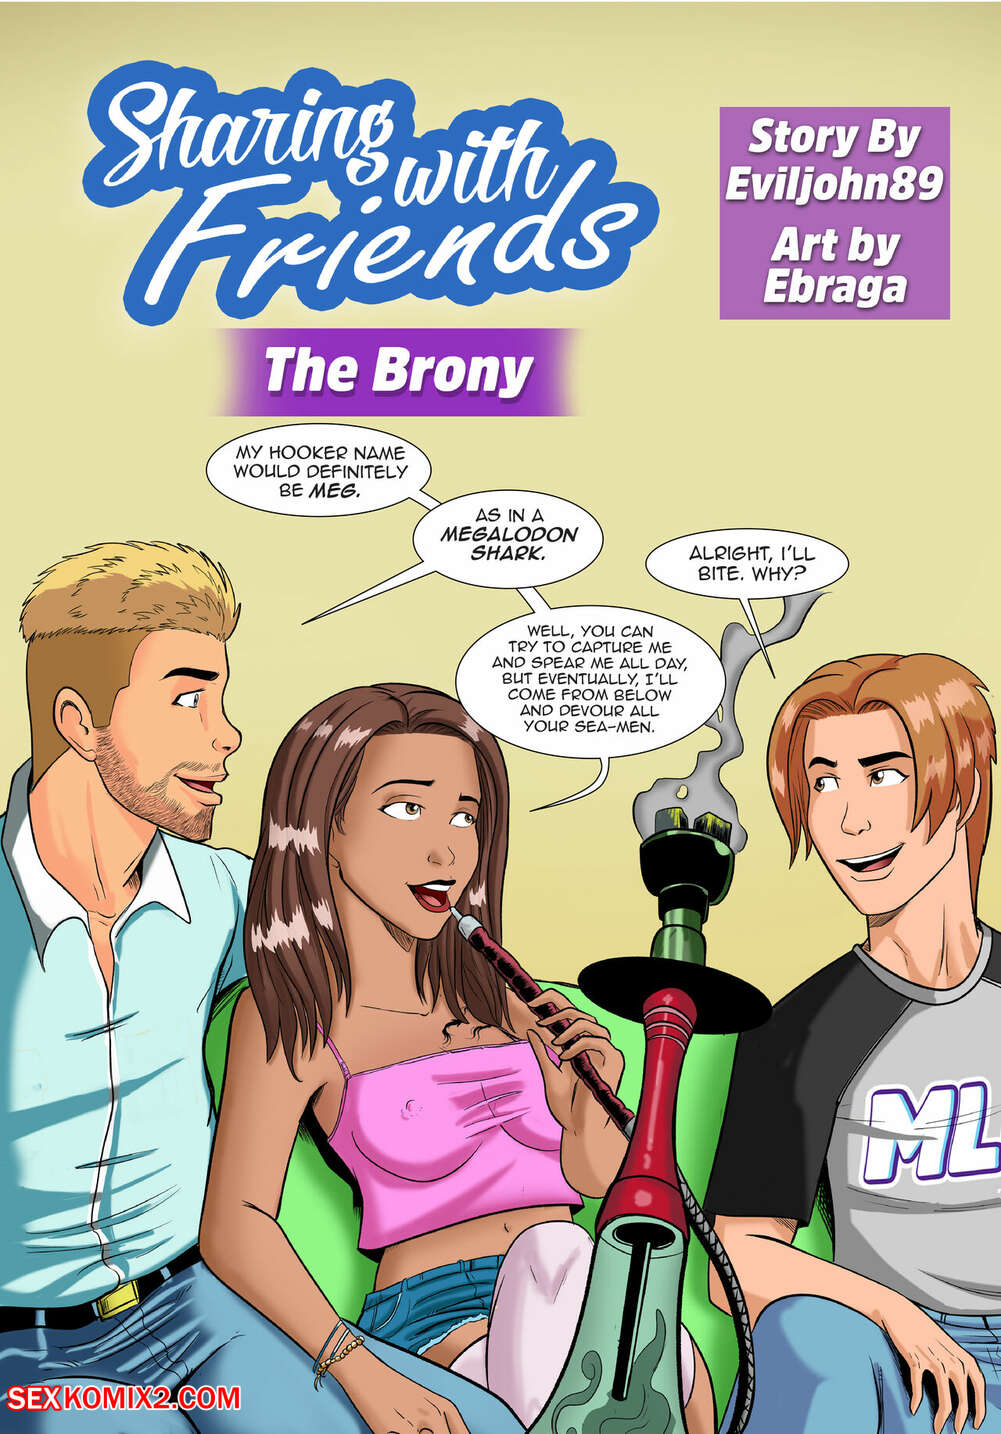 Porn Share - âœ…ï¸ Porn comic Sharing with Friends. The Brony. Eviljohn89, Ebraga. Sex  comic busty brunette is âœ…ï¸ | | Porn comics hentai adult only |  wporncomics.com